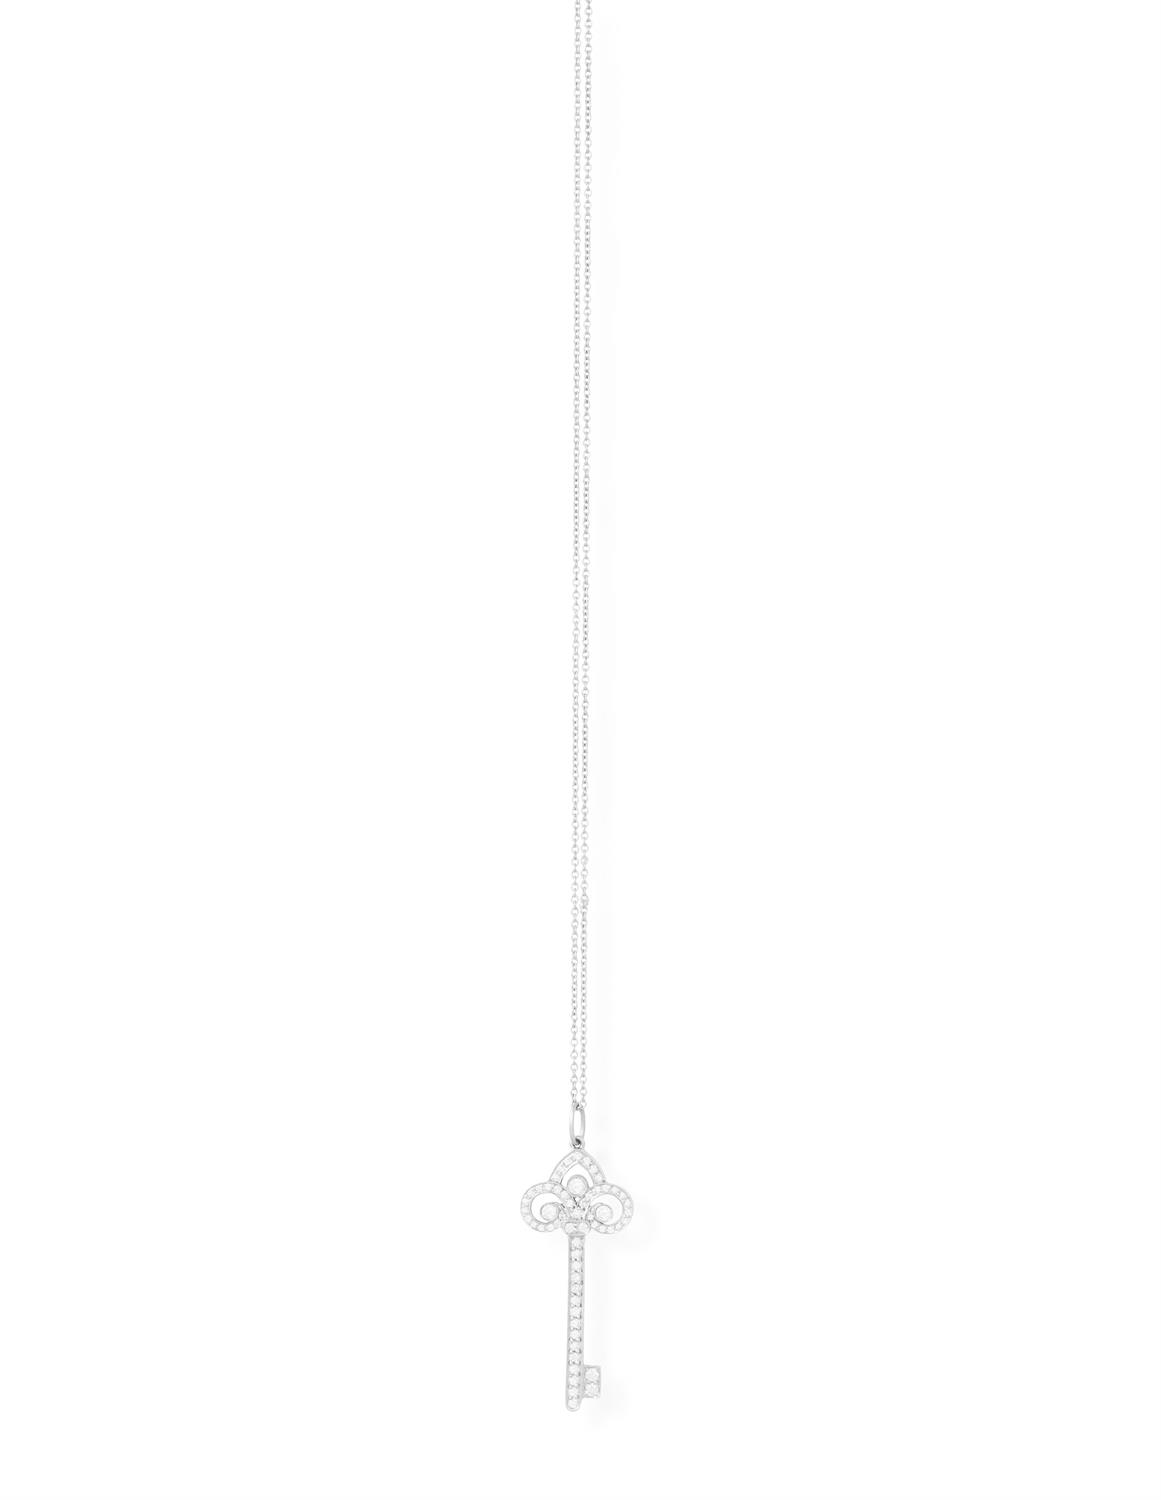 A DIAMOND 'FLEUR DE LIS' PENDANT ON CHAIN, BY TIFFANY & CO. Modelled as a stylised key, - Image 2 of 5